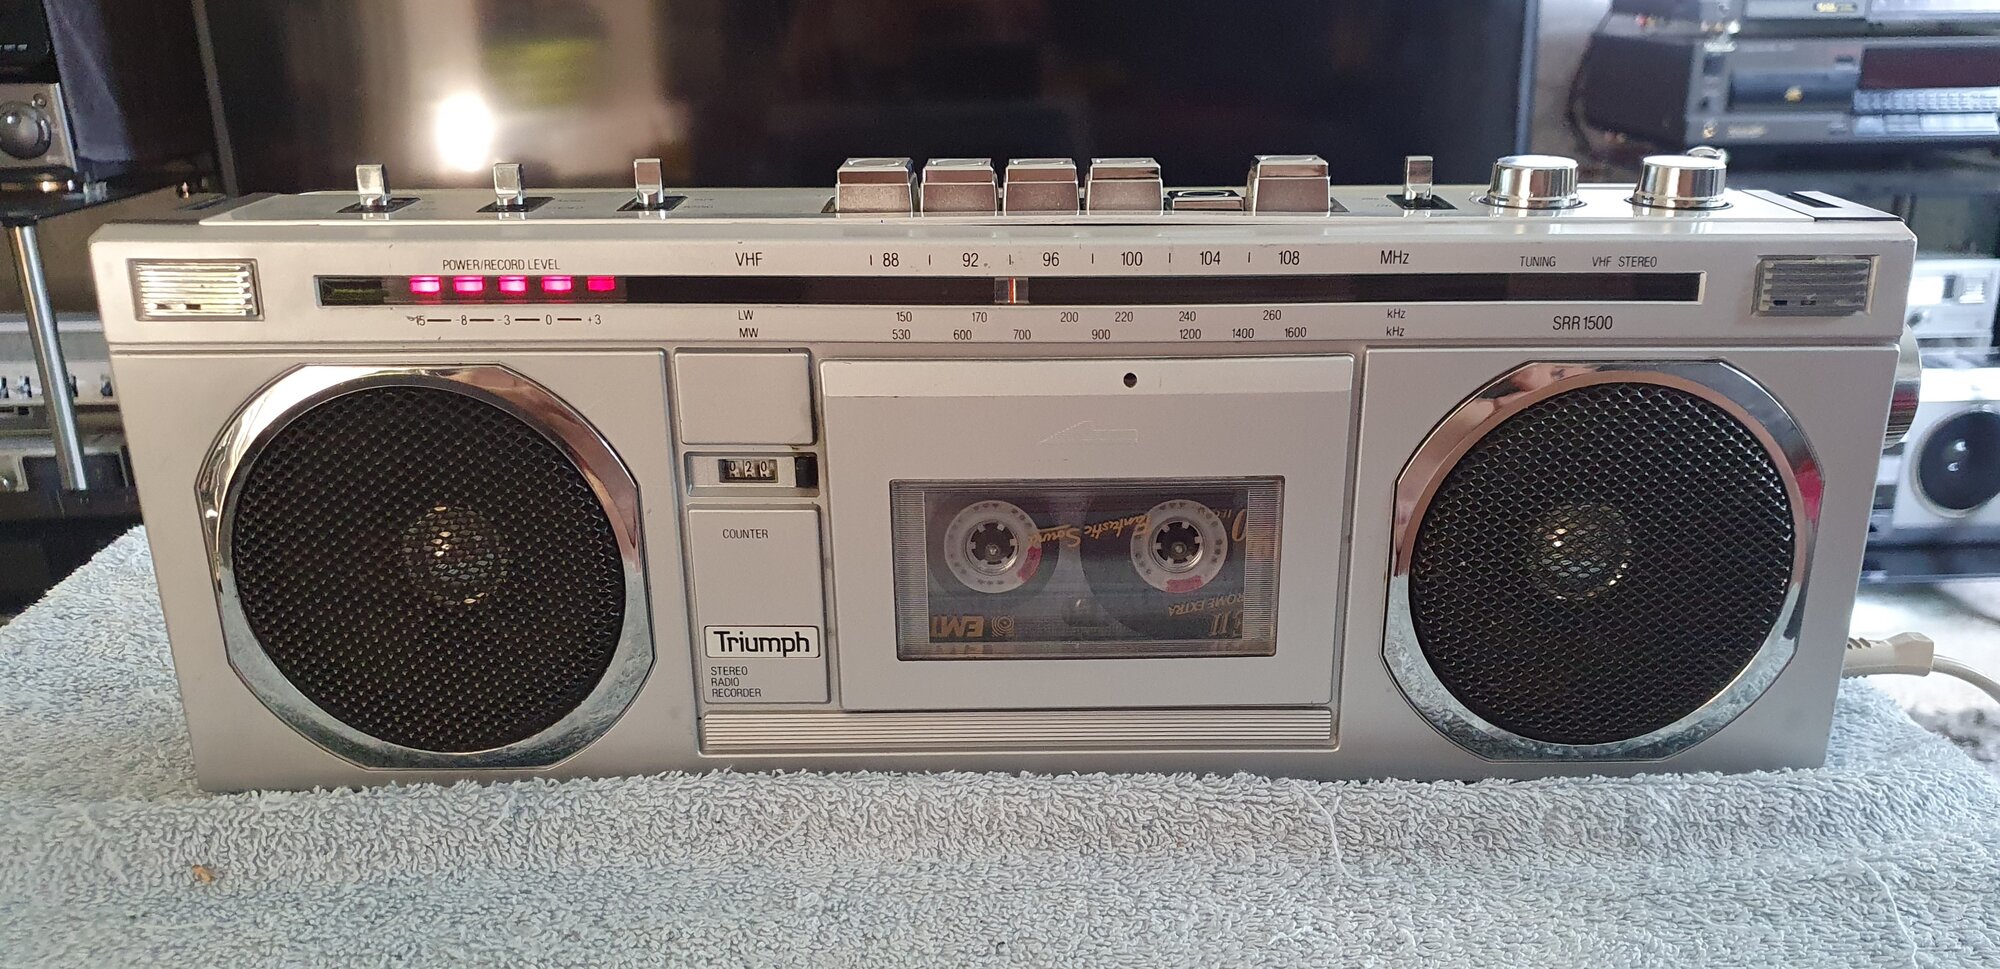 Triumph SRR-1500 Radio Cassette Recorder Restore - 23 June 2022 (13).jpg